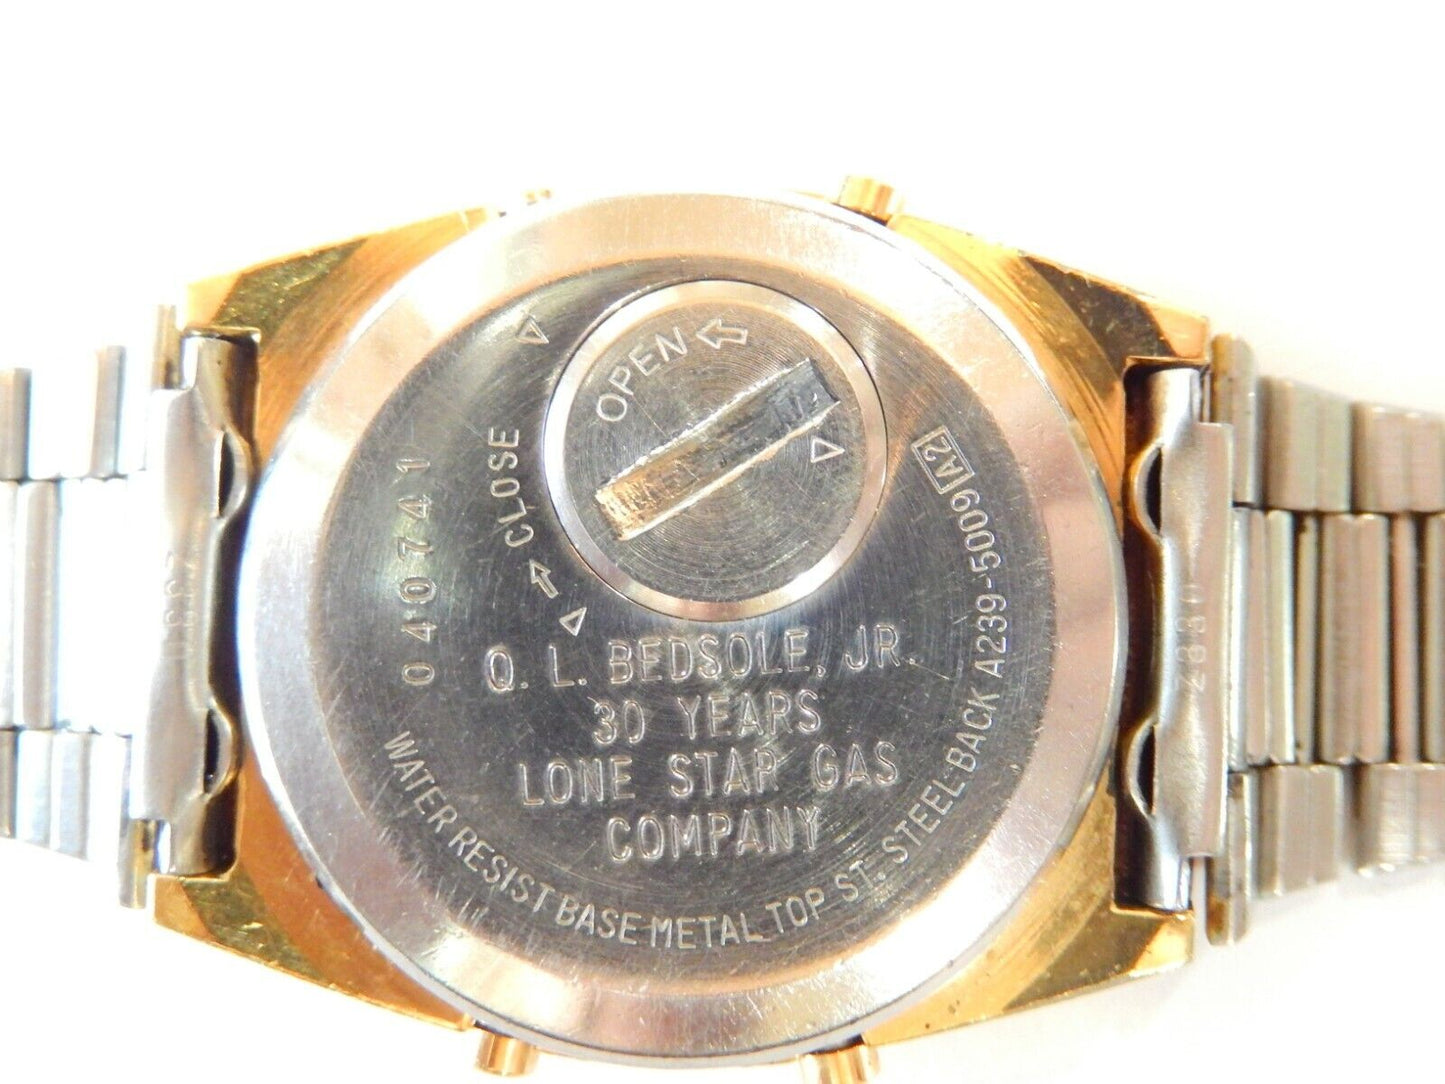 *VINTAGE*  RARE Seiko A239-5009 World Timer Alarm Rare Gold Tone  1970's Watch